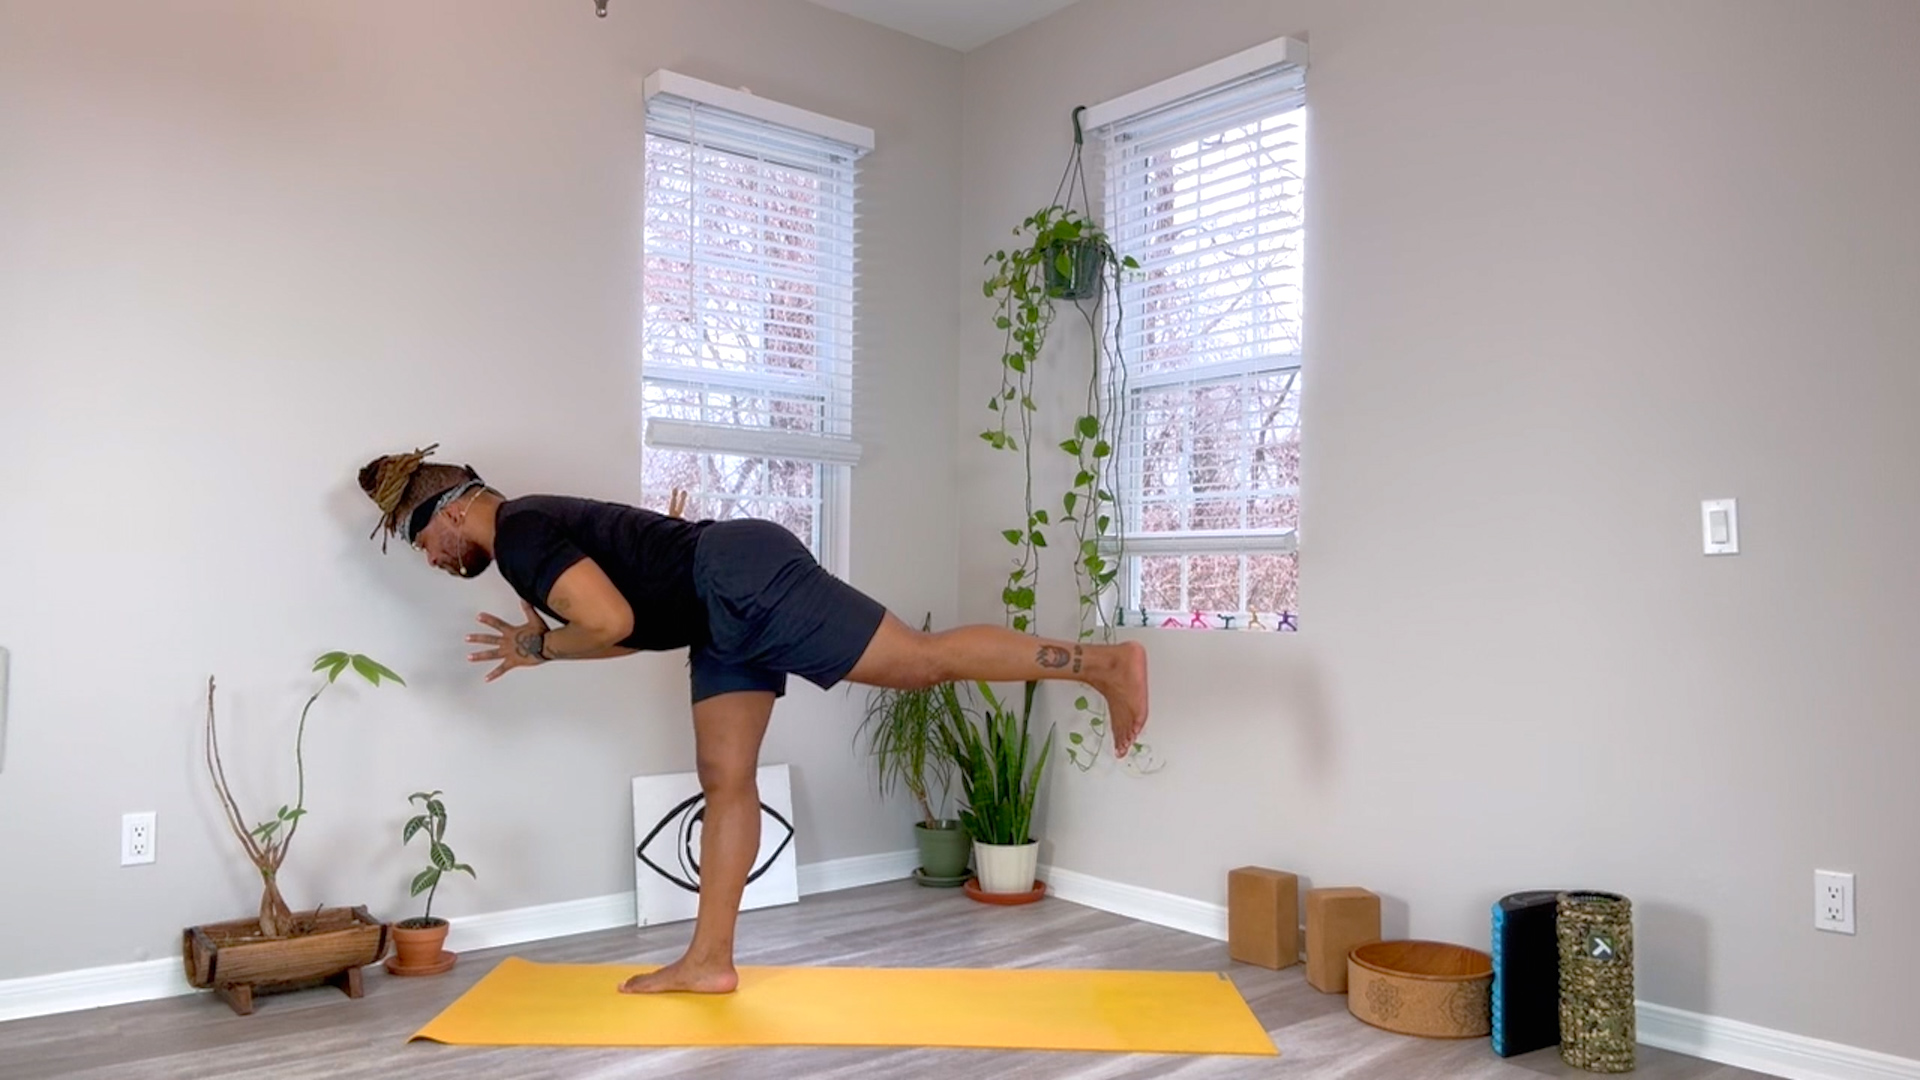 This Black Yoga Instructor Explains How Yoga Can Improve Black